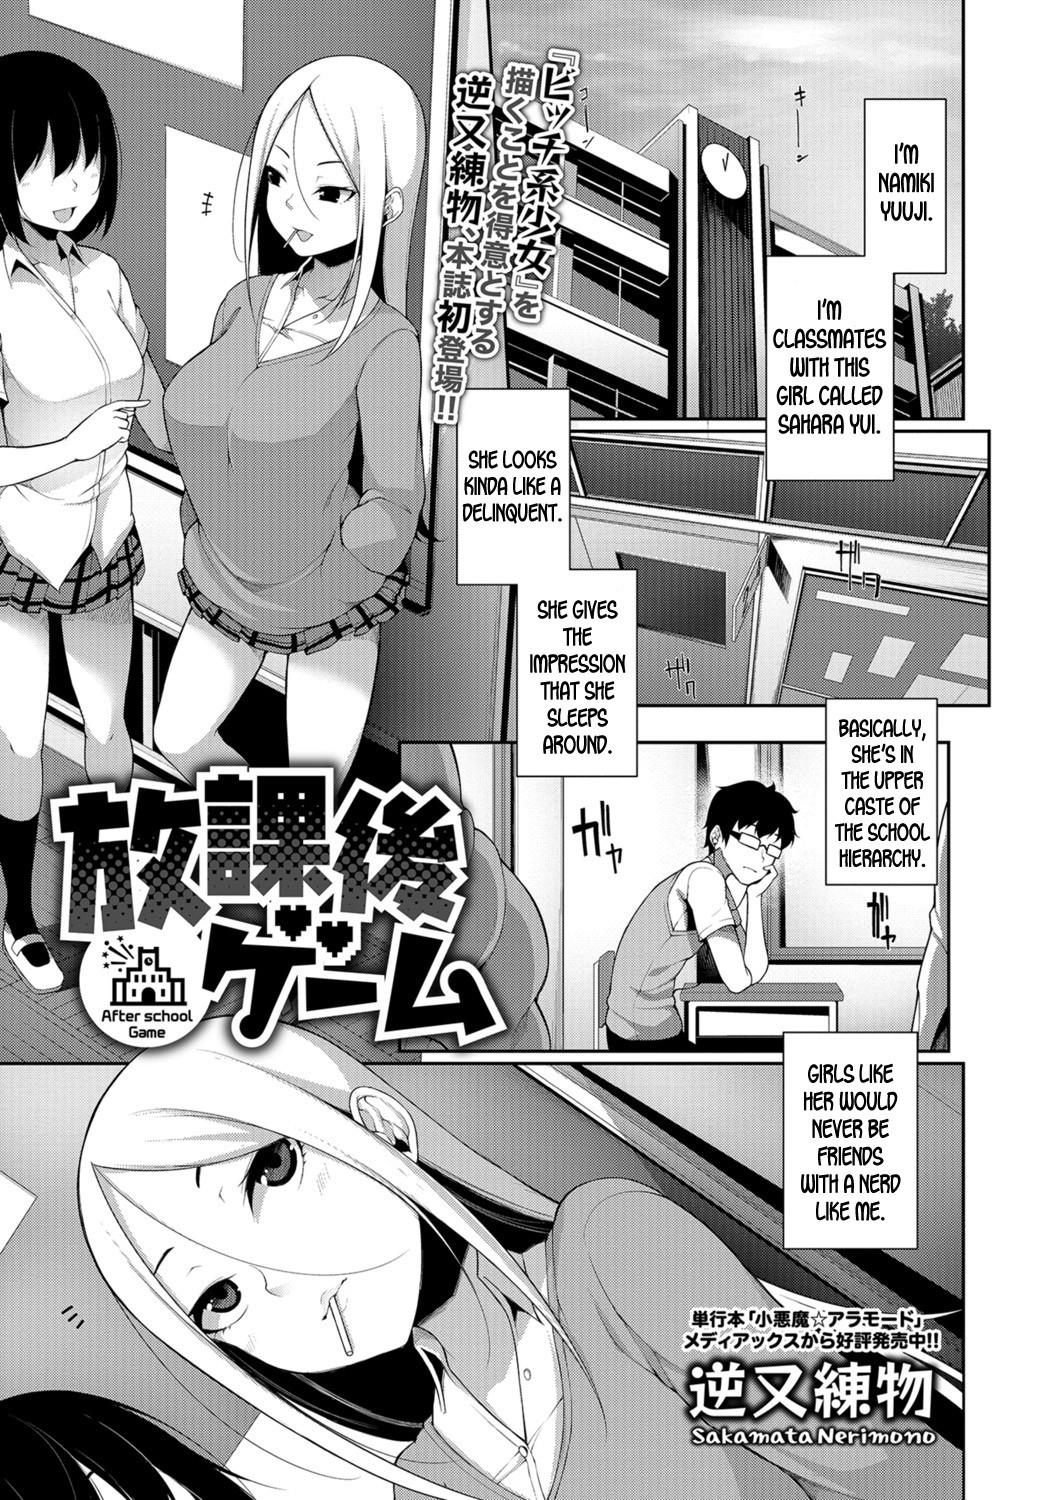 Hentai Manga Comic-After School Game-Read-1